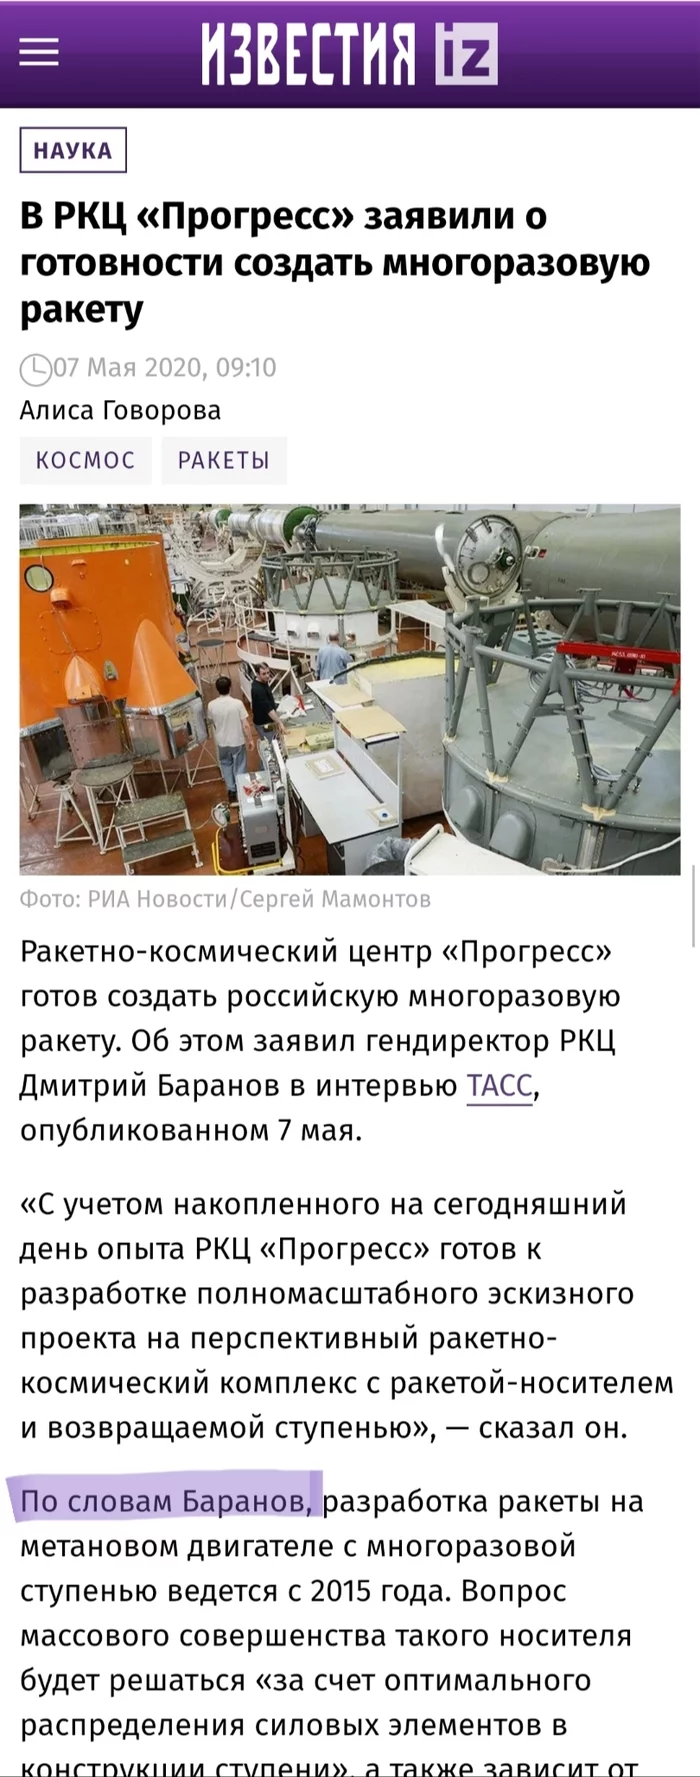 Attitude towards Russian cosmonautics - Cosmonautics, Branch office, RCC Progress, Typo, Longpost